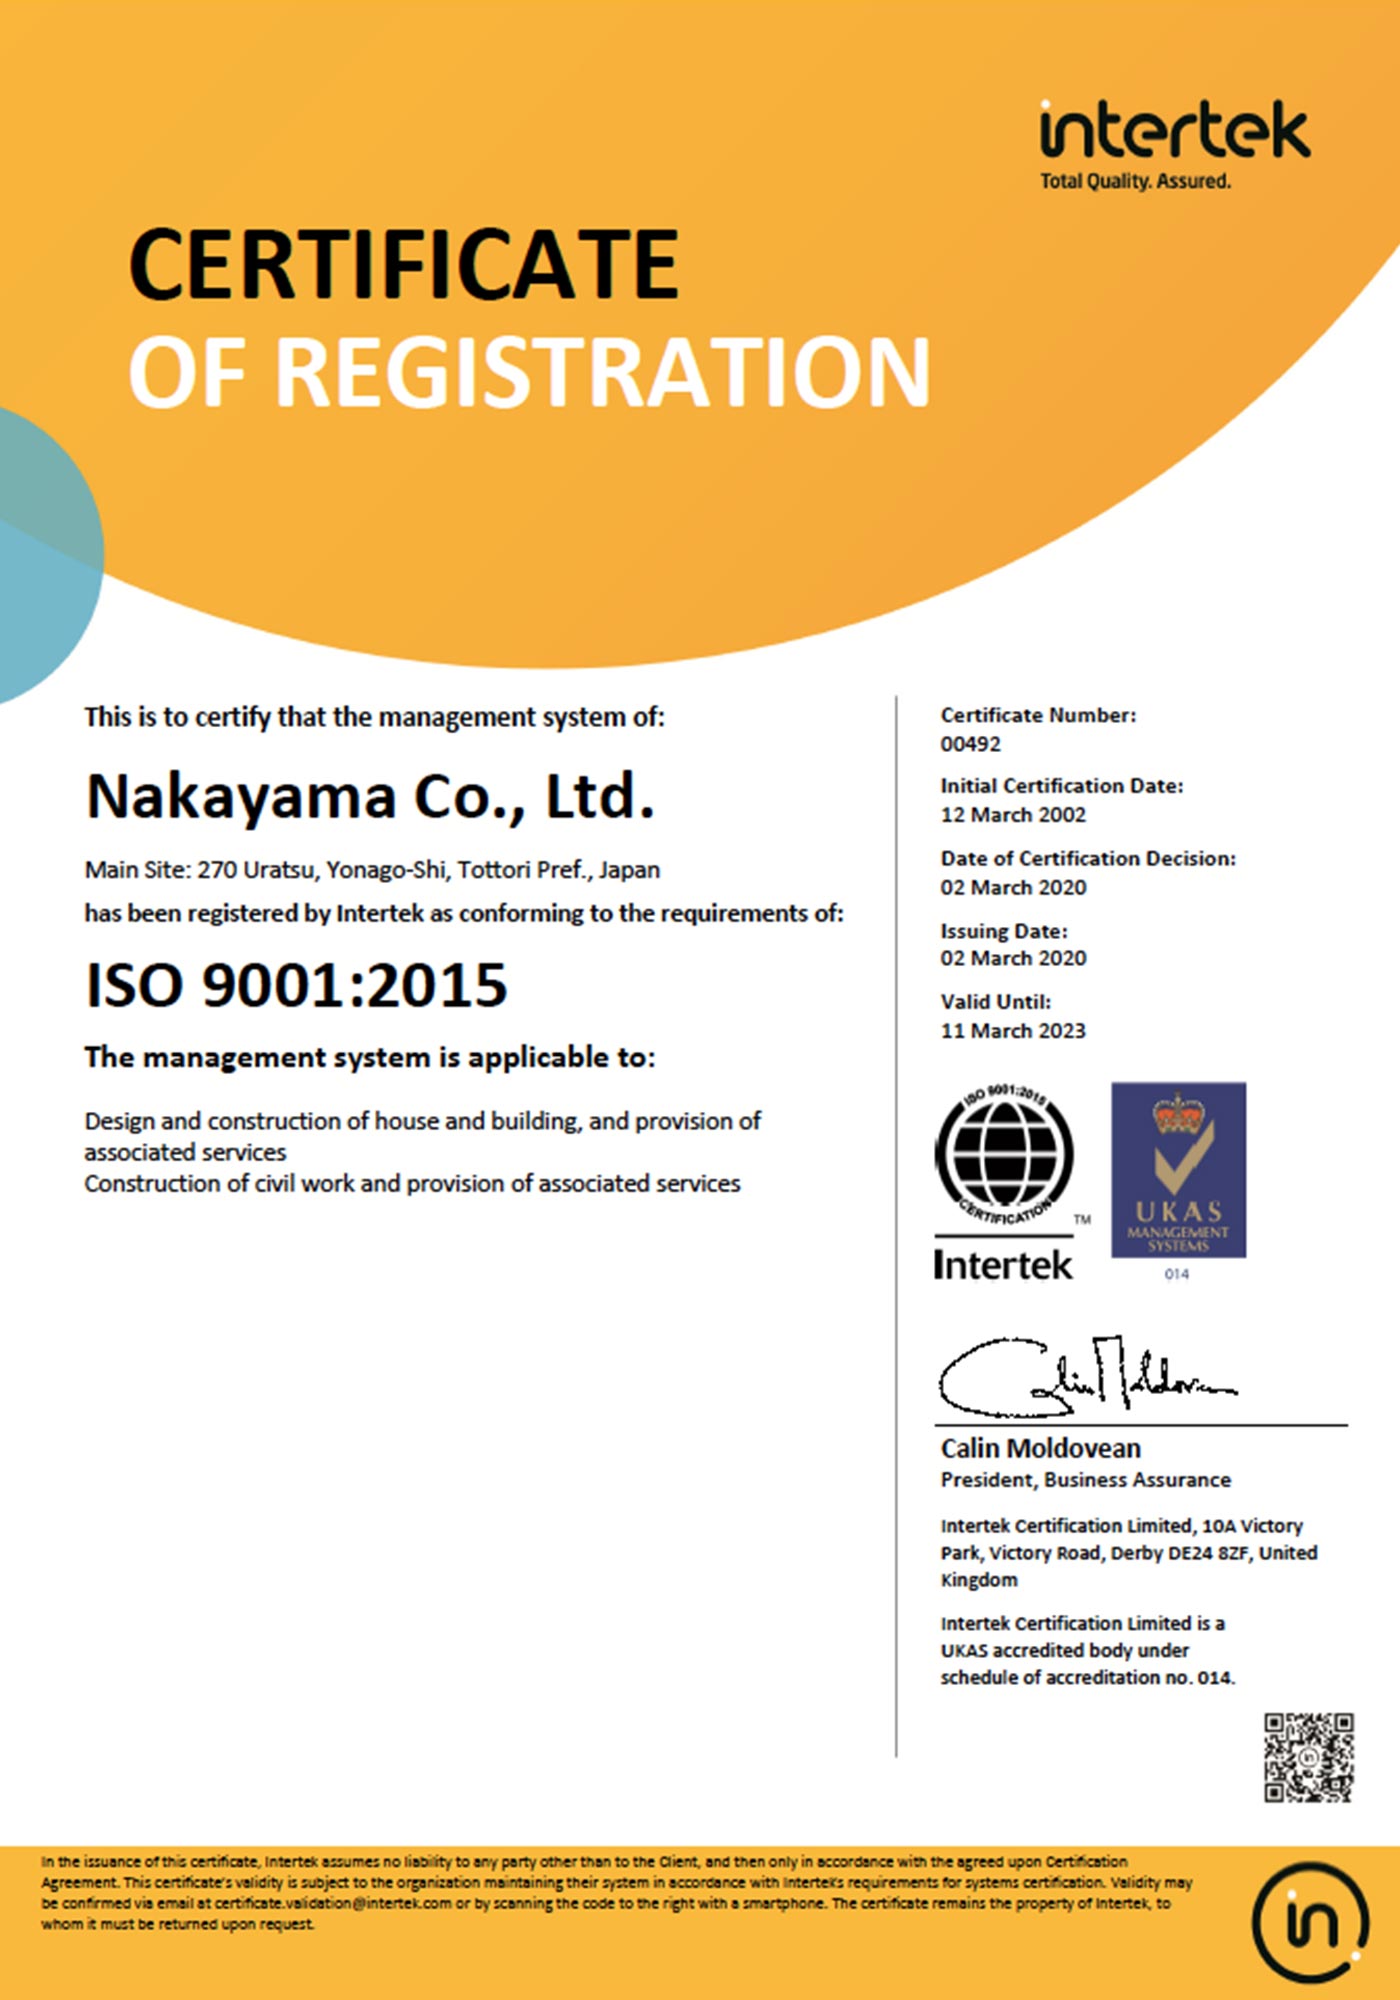 ISO certificate of registration